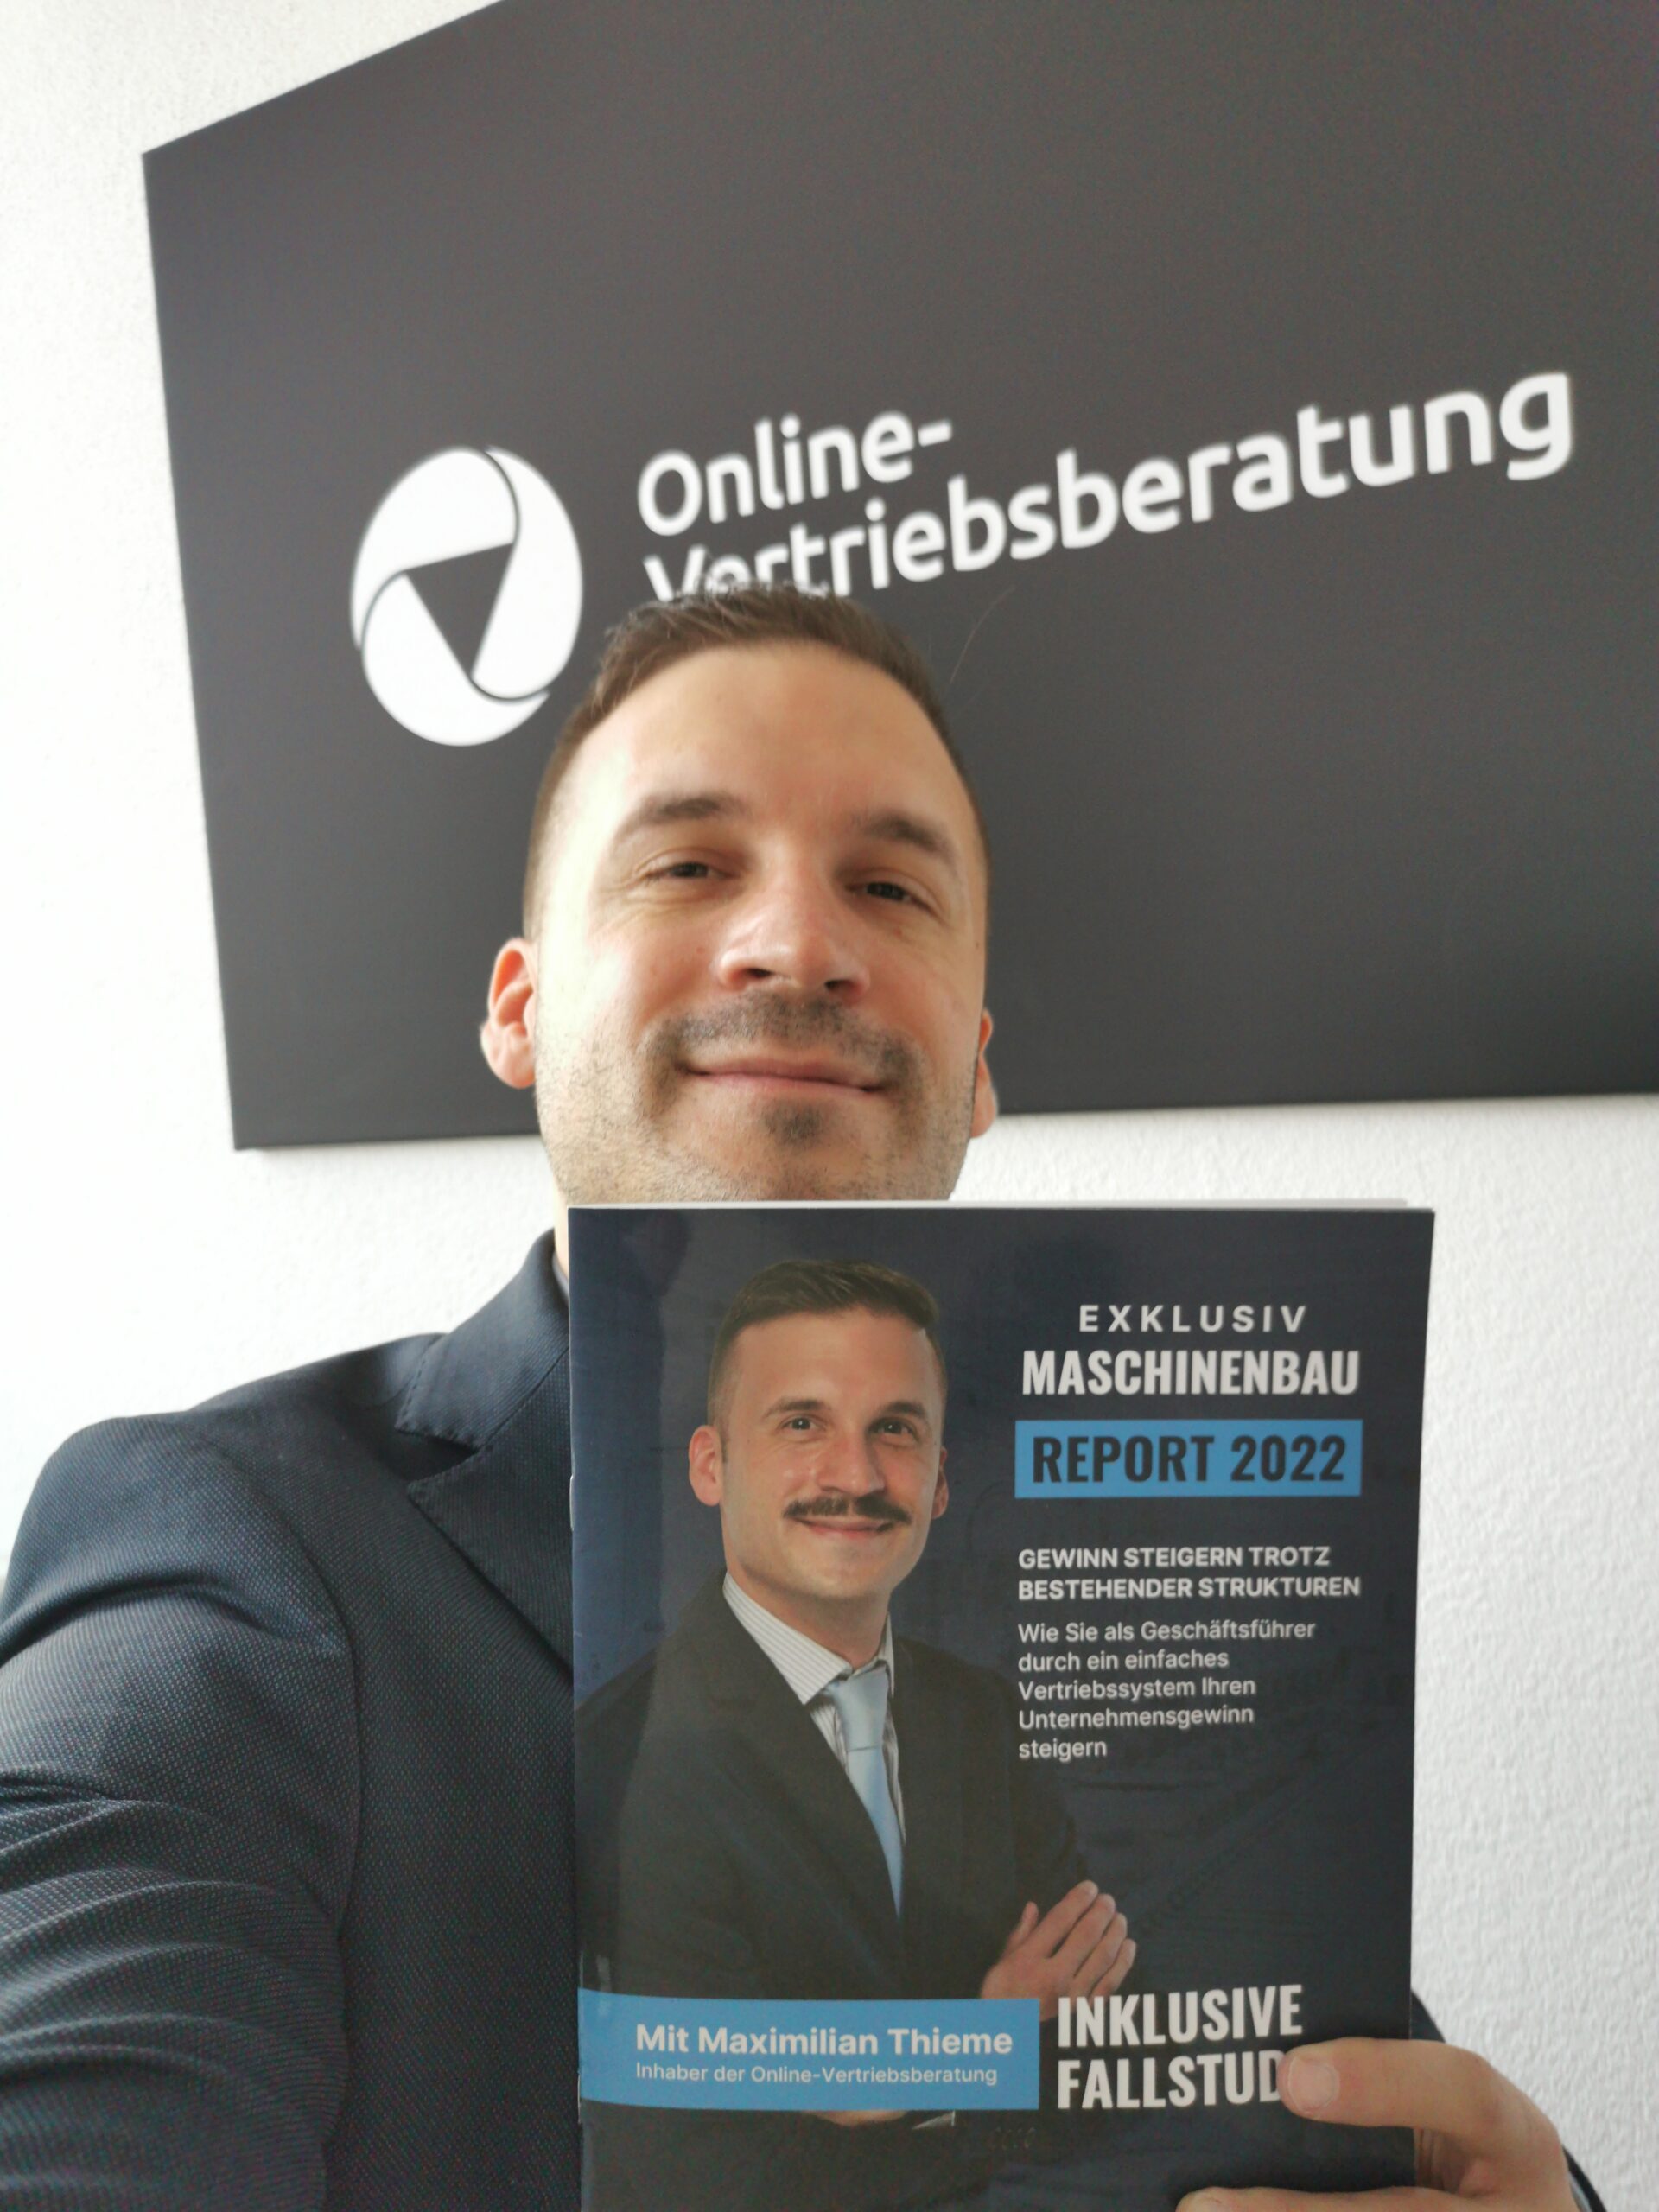 Online-Vertriebsberatung - Max Thieme & Maschinenbau Report